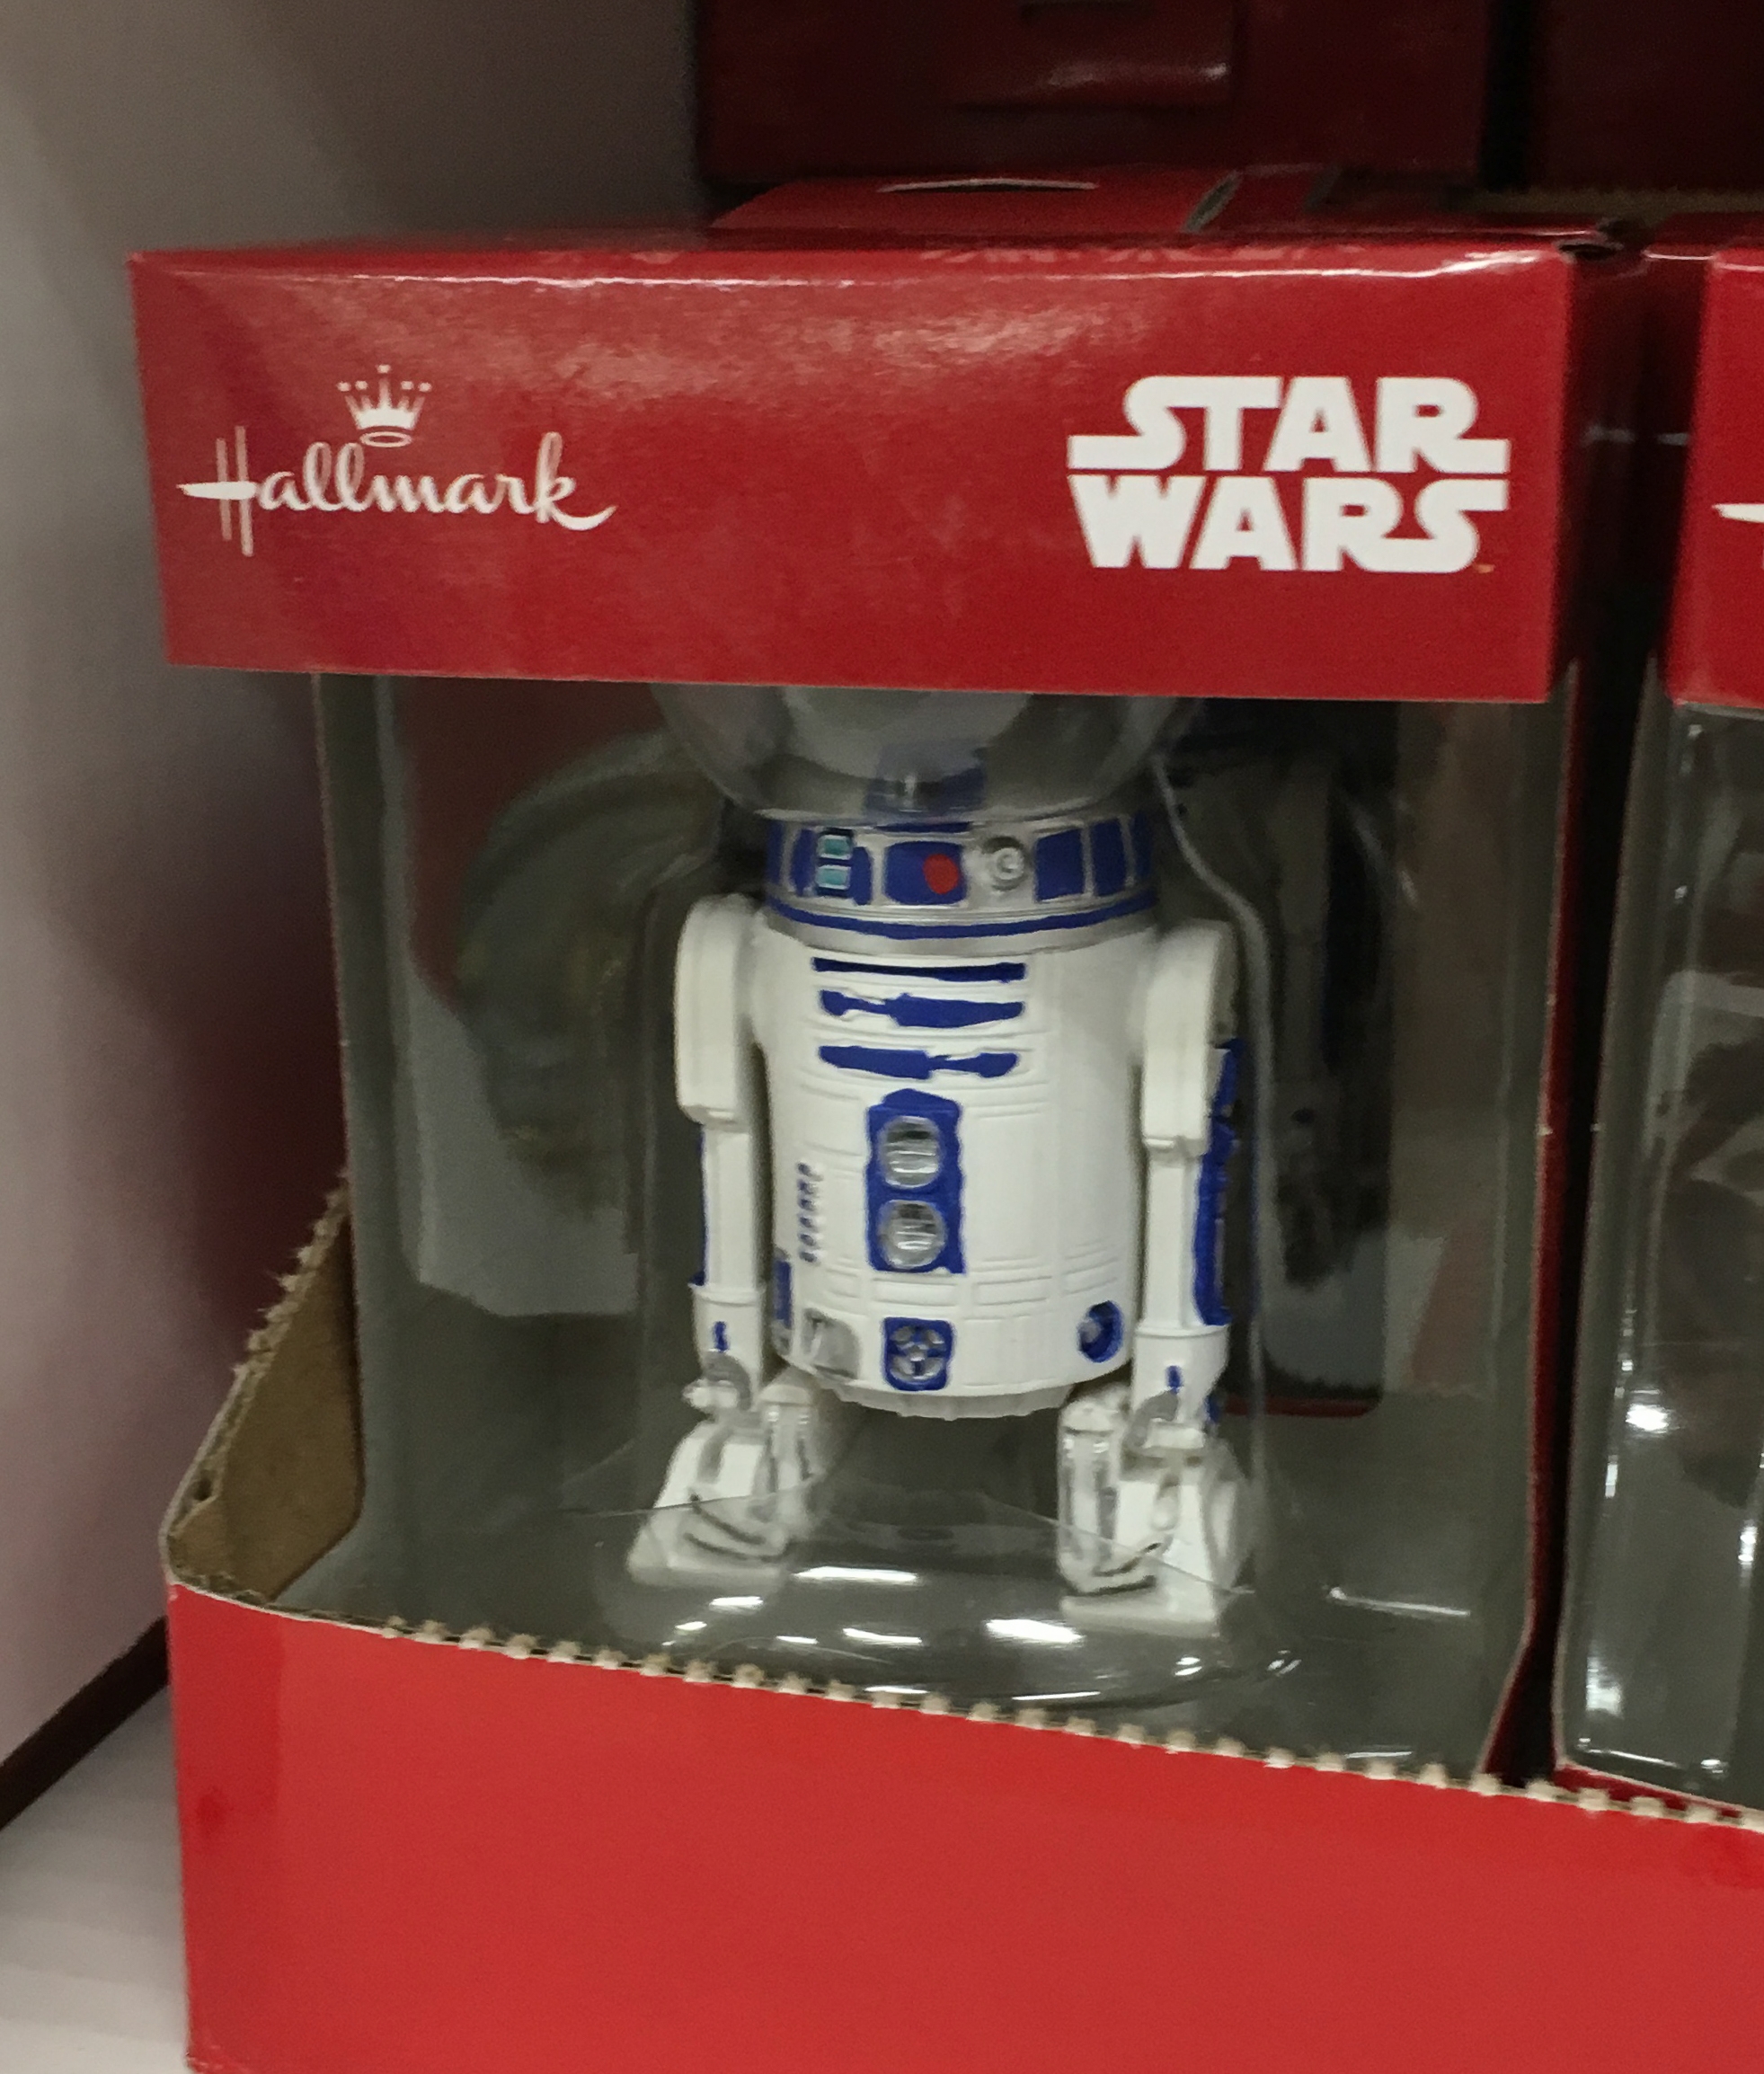 Hallmark-Retail-Star-Wars-Ornaments-2016-008.jpg